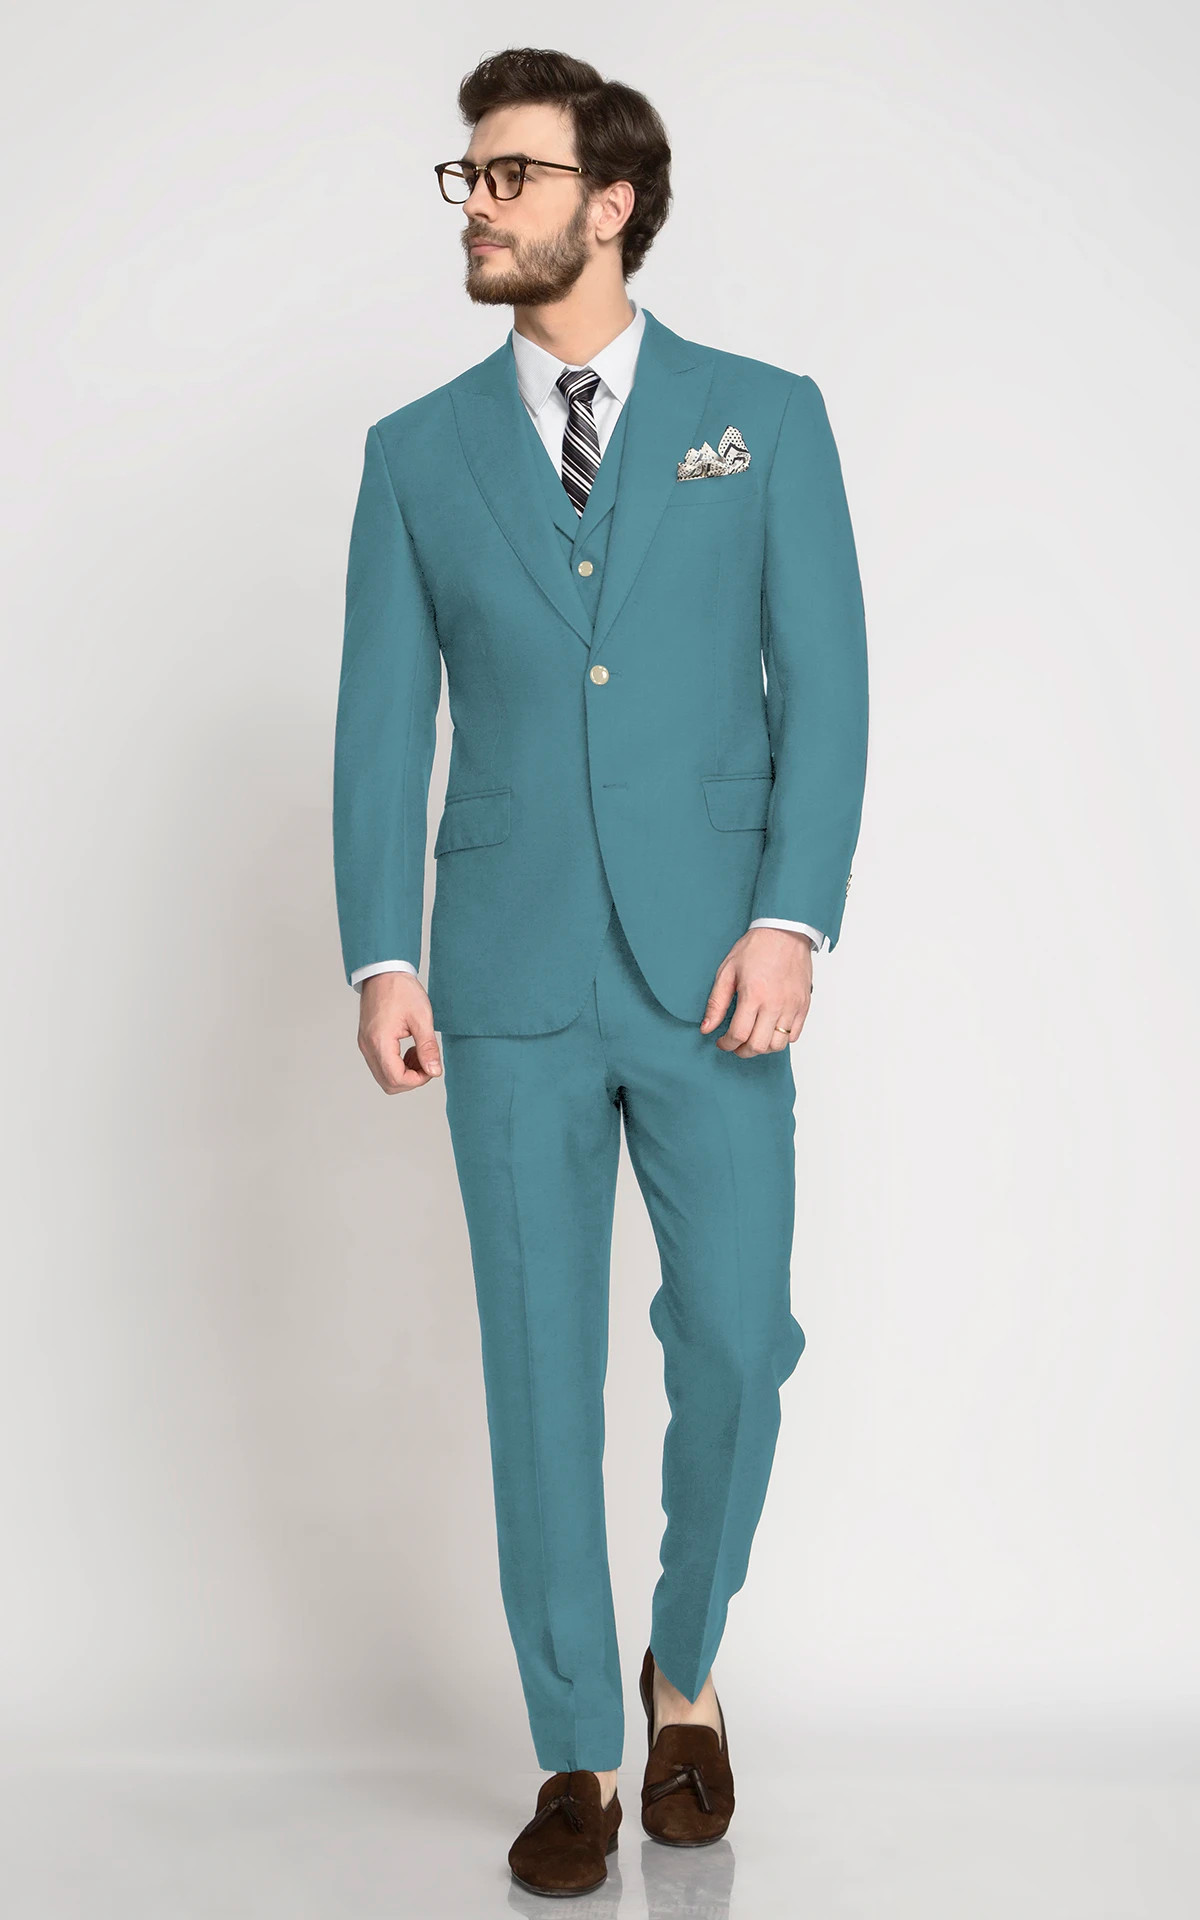 Tailored Suit Shop Brisbane | Tony Barlow Brisbane